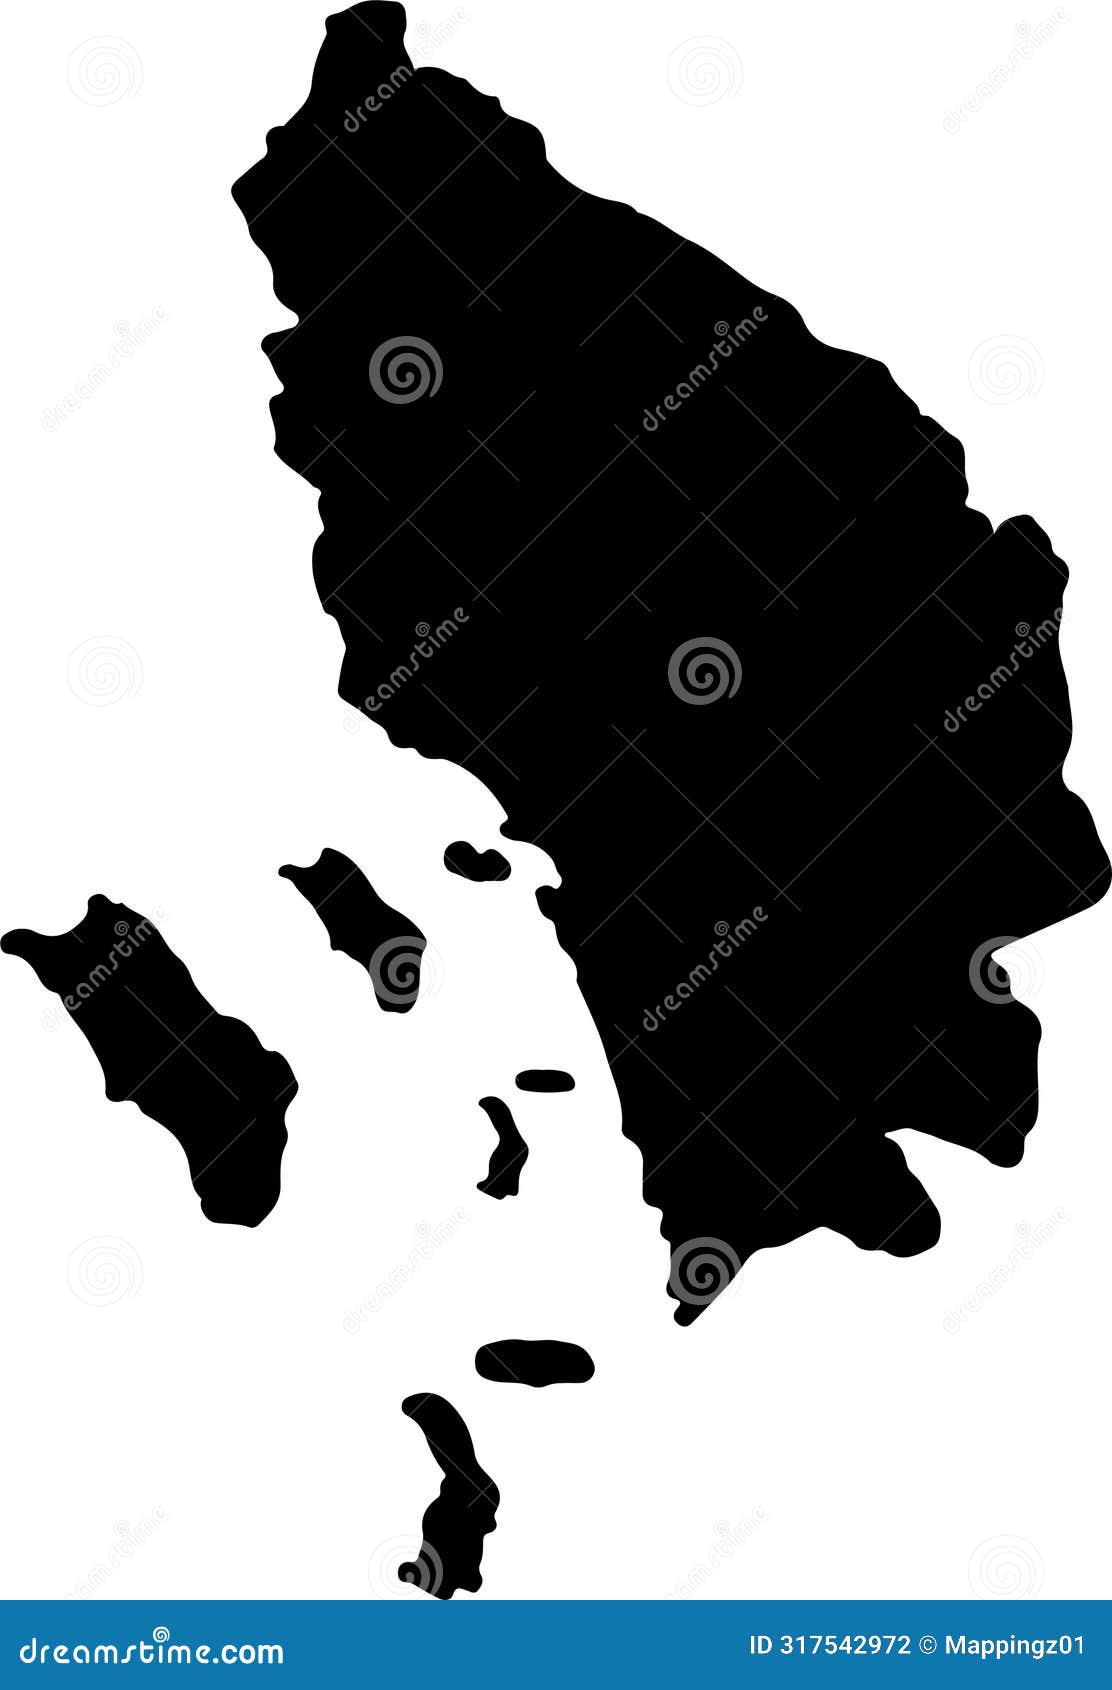 sumatera utara indonesia silhouette map with transparent background